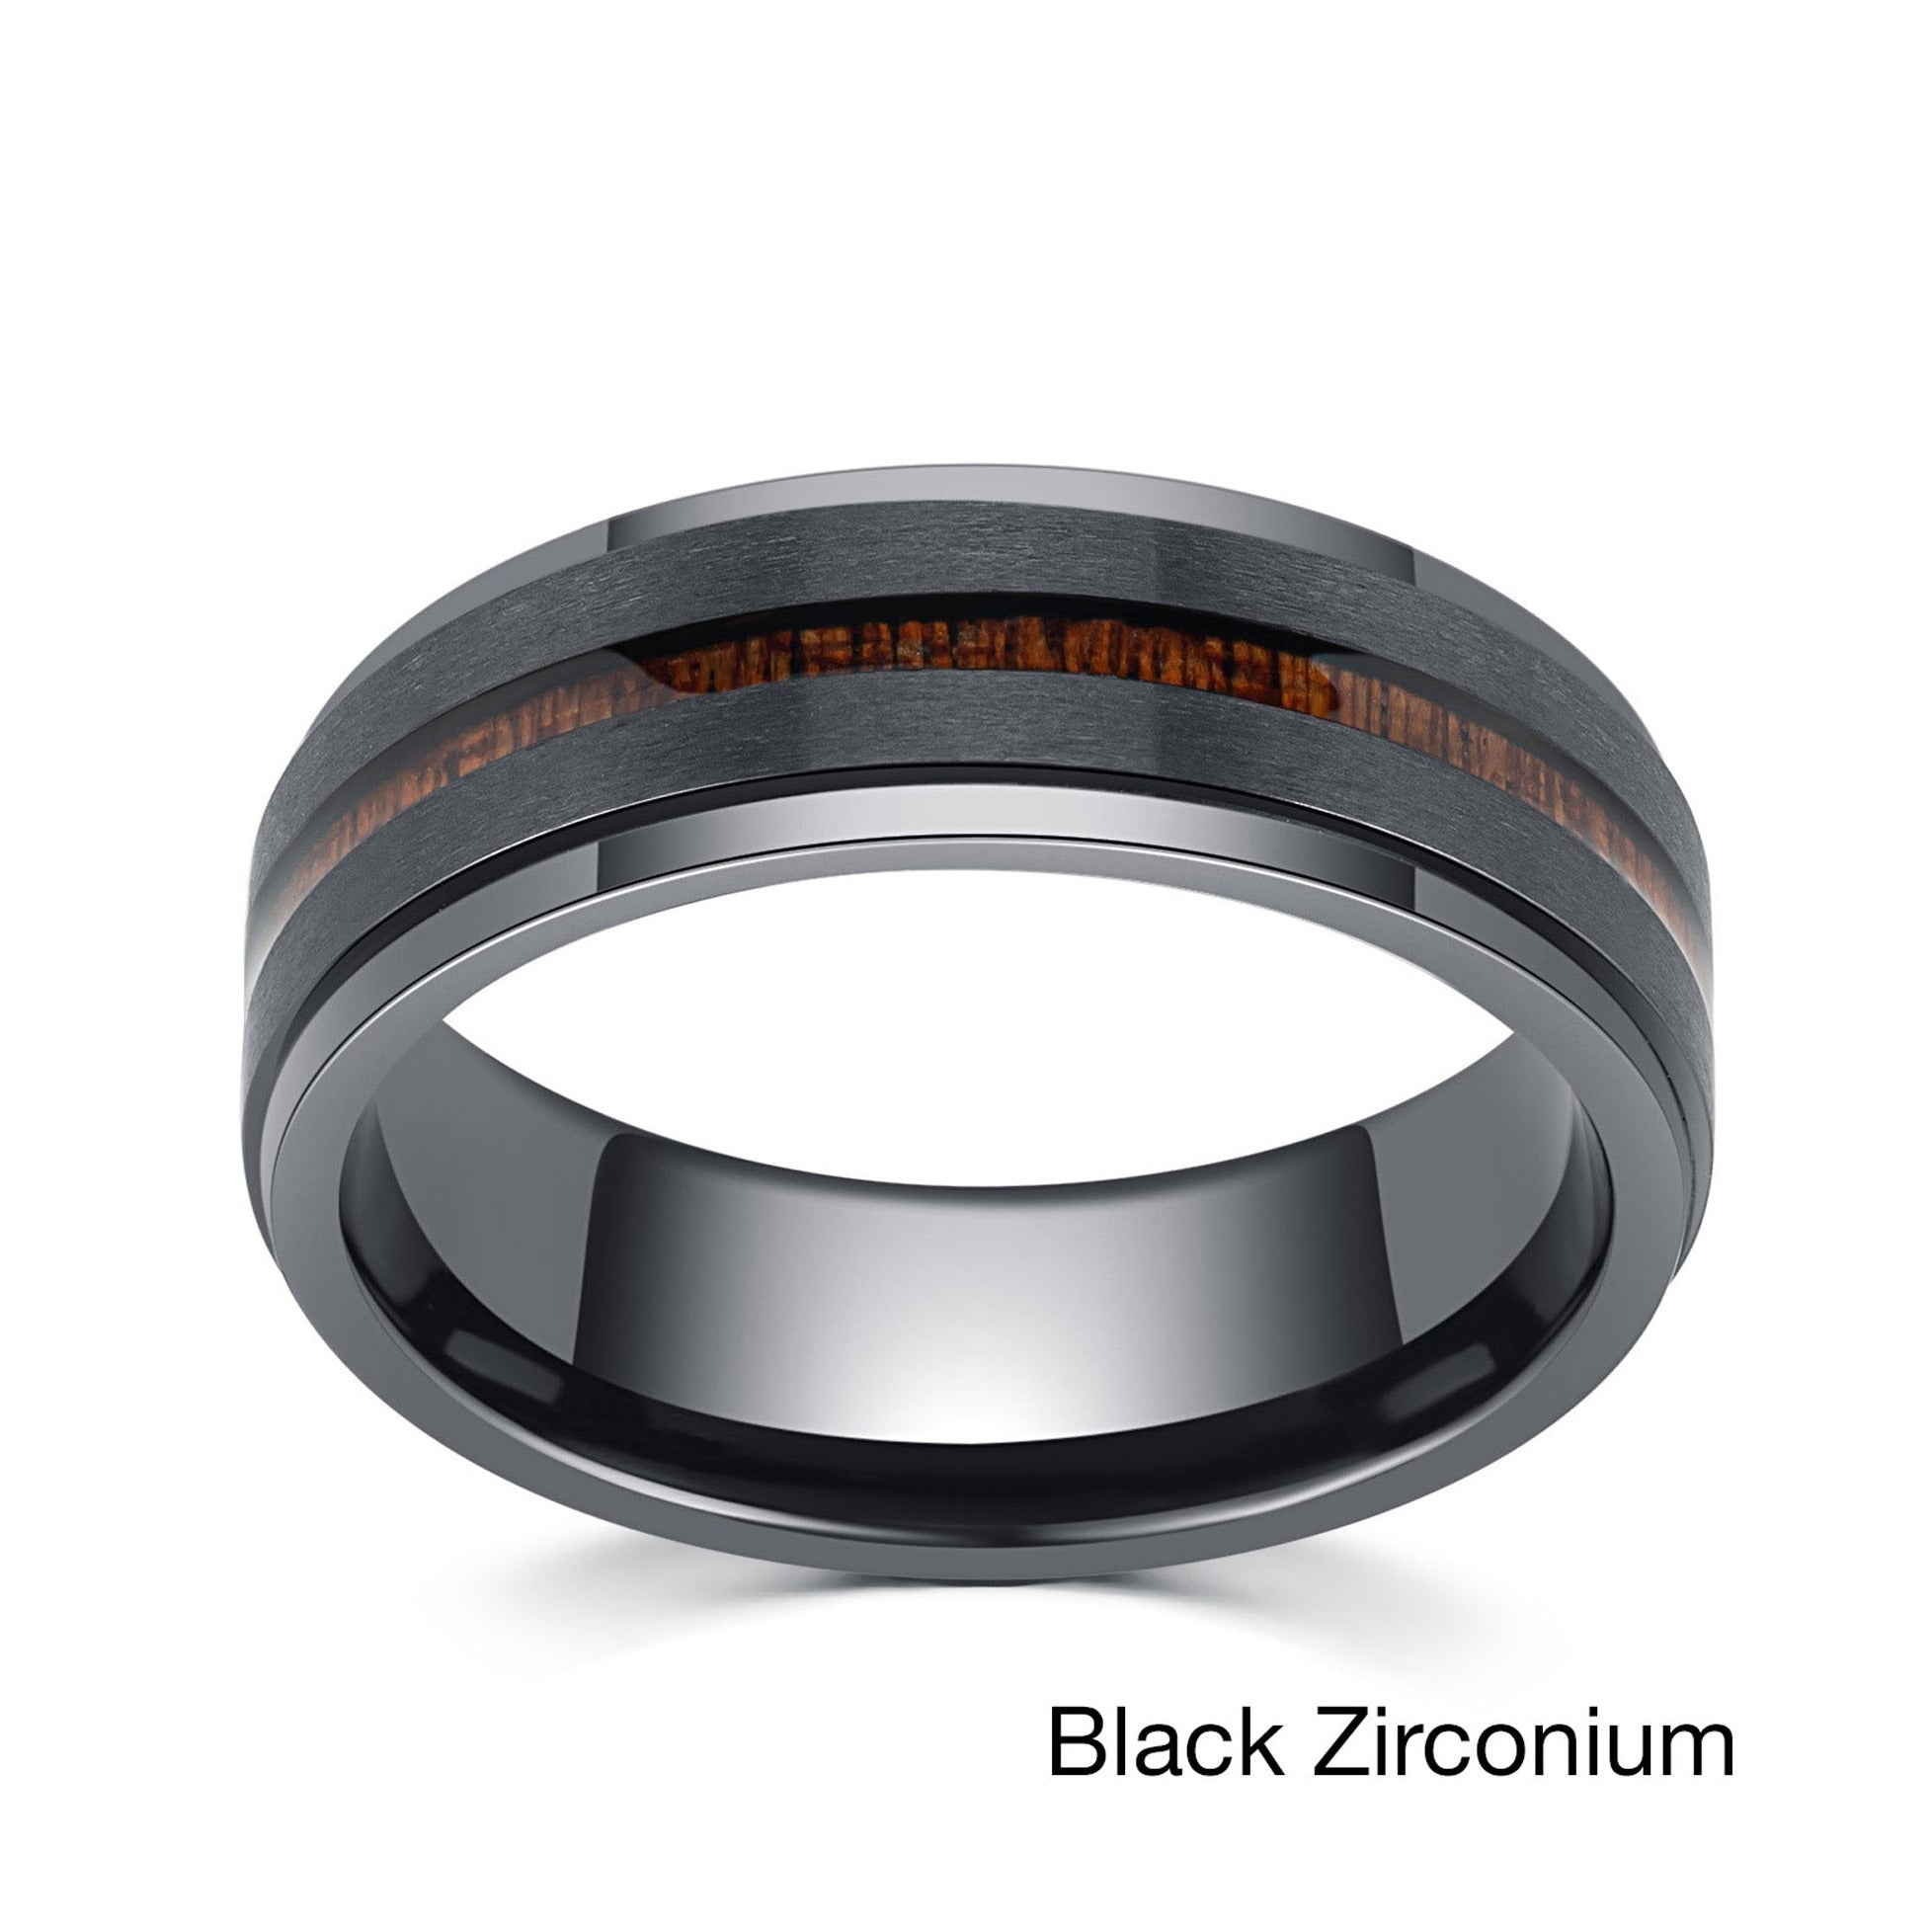 Black Zirconium with Stepped Edge and Koa Wood Inlay, 8MM